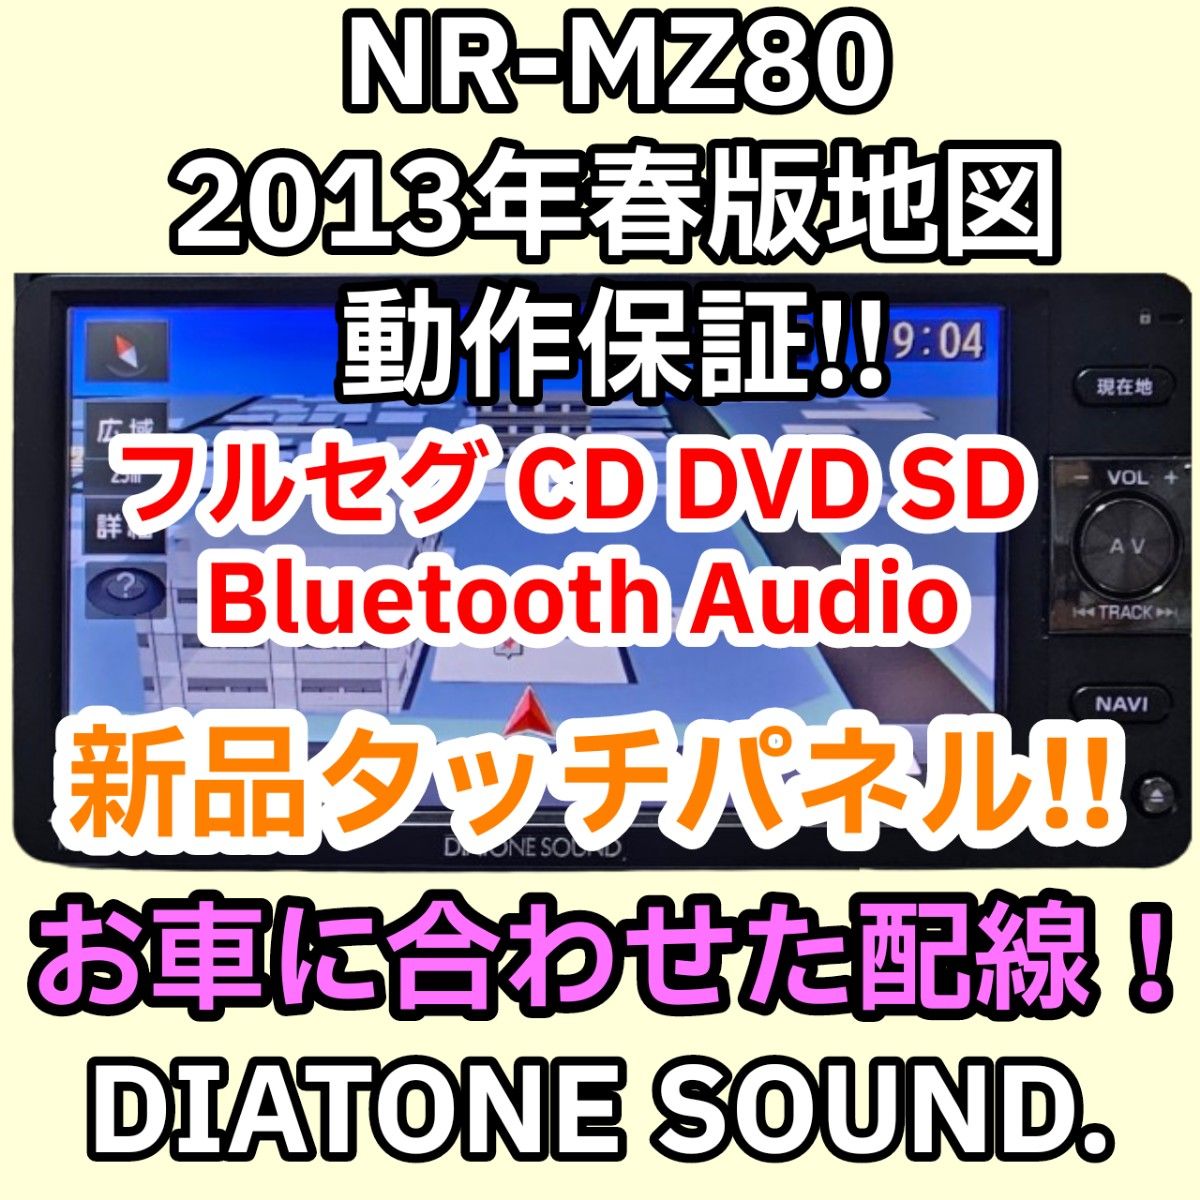 高音質 保証付 送料無料 三菱電機 DIATONE SOUND. NAVI NR-MZ80 2013年春 新品タッチパネル 配線付